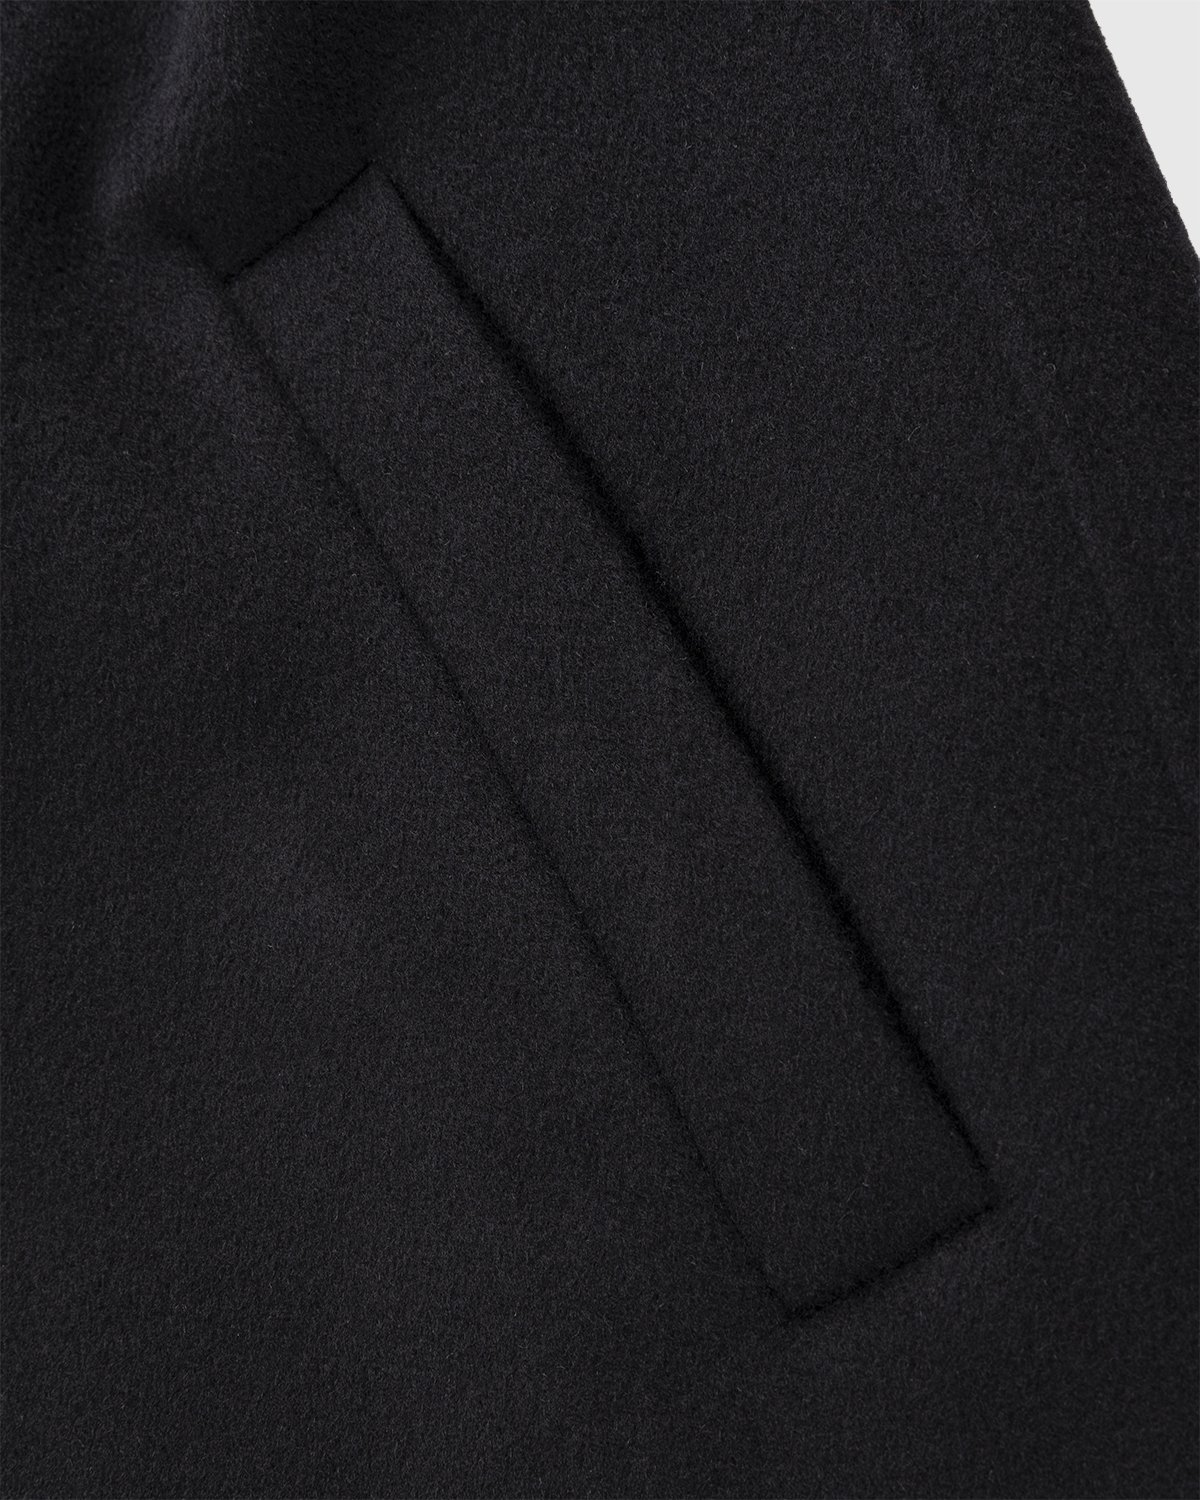 Acne Studios - Doubleface Coat Black - Clothing - Black - Image 5